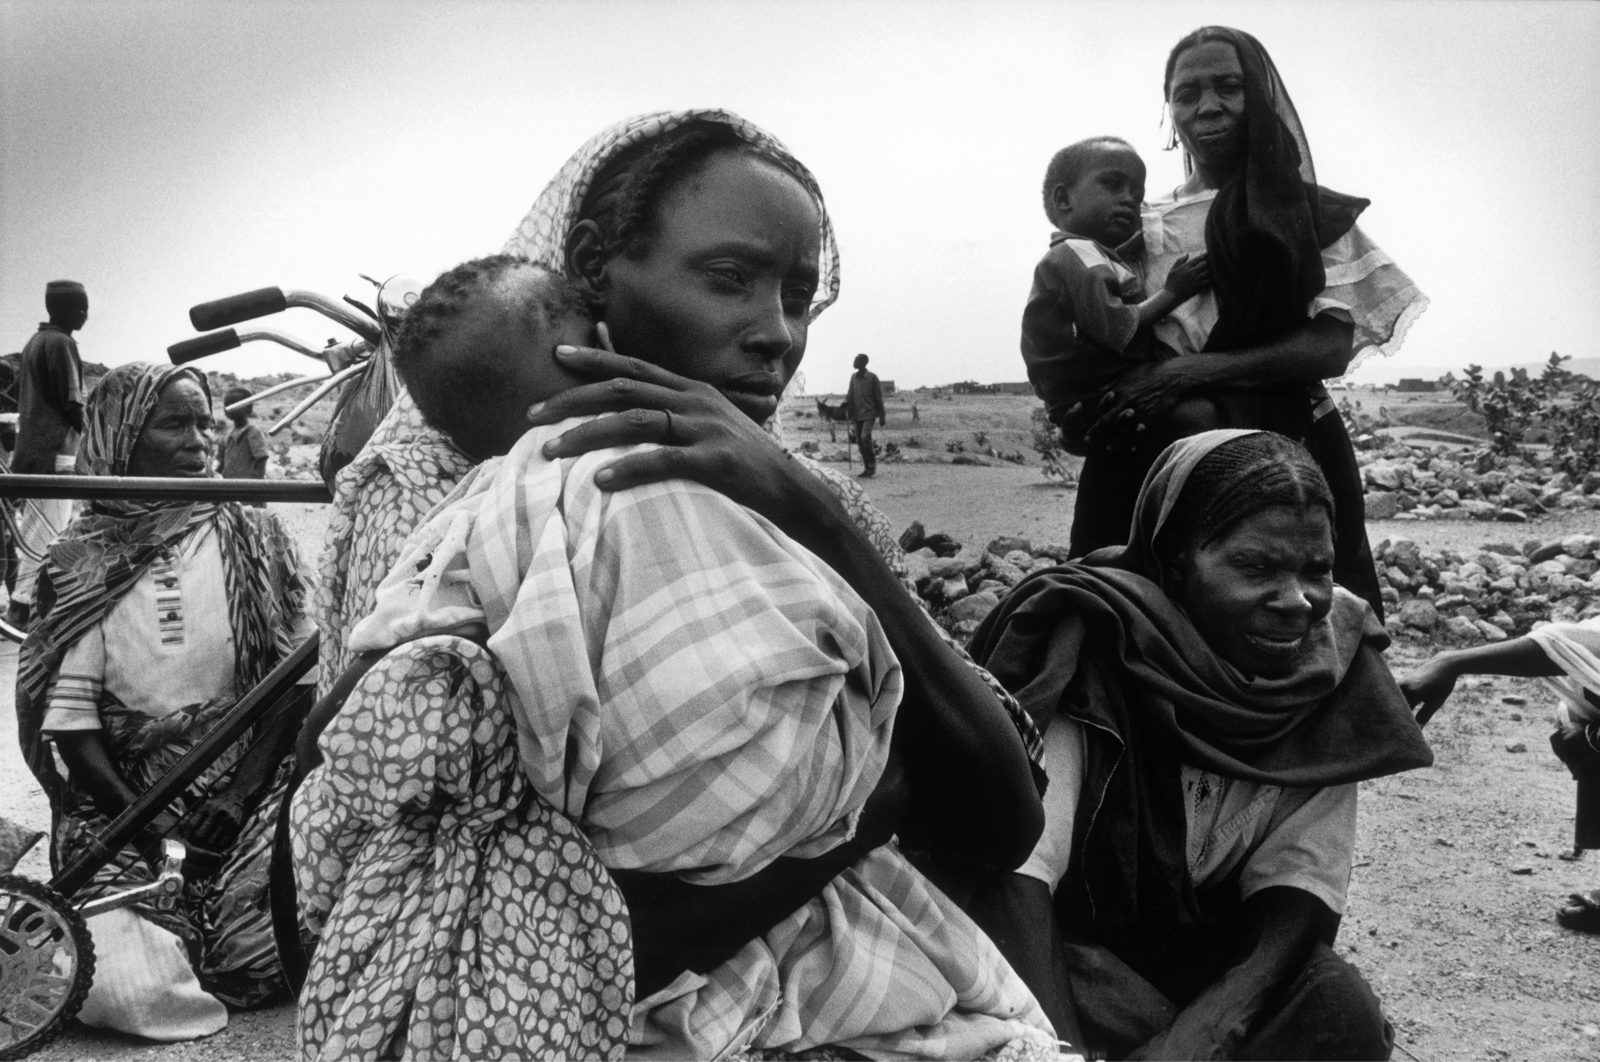 Sudan, 2004